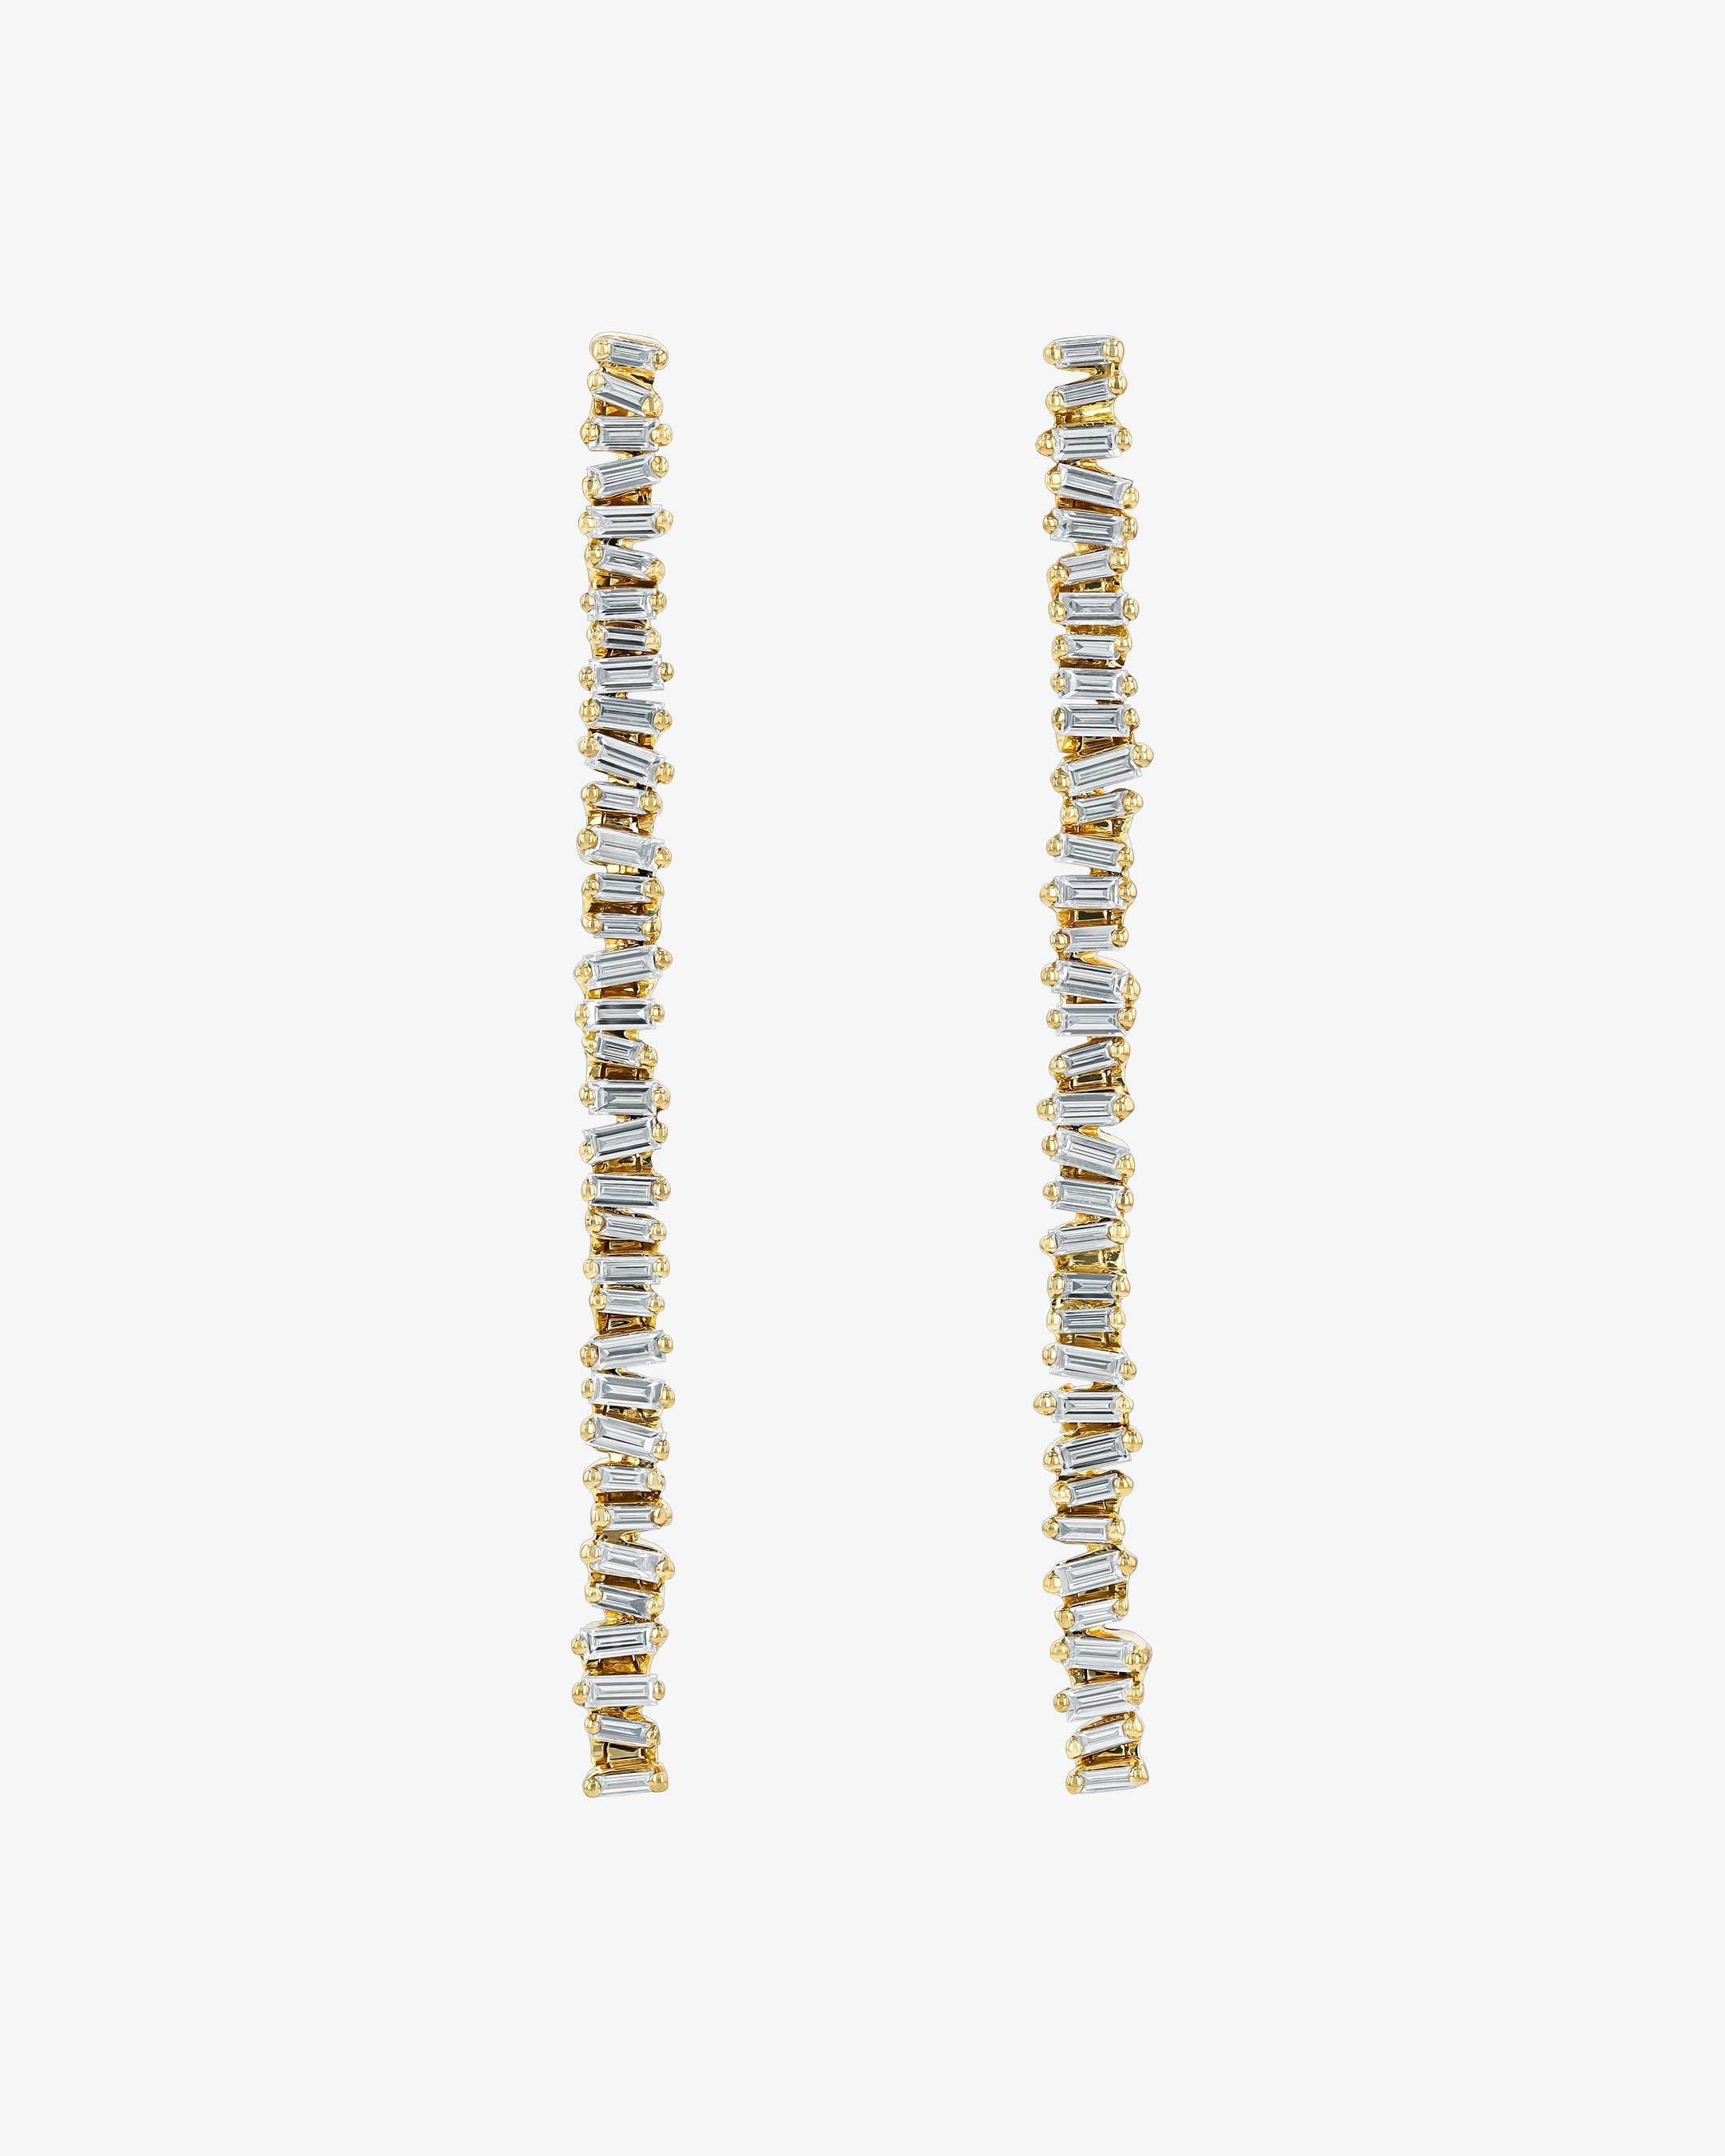 Suzanne Kalan Classic Diamond Savannah Milli Drop Earrings in 18k yellow gold